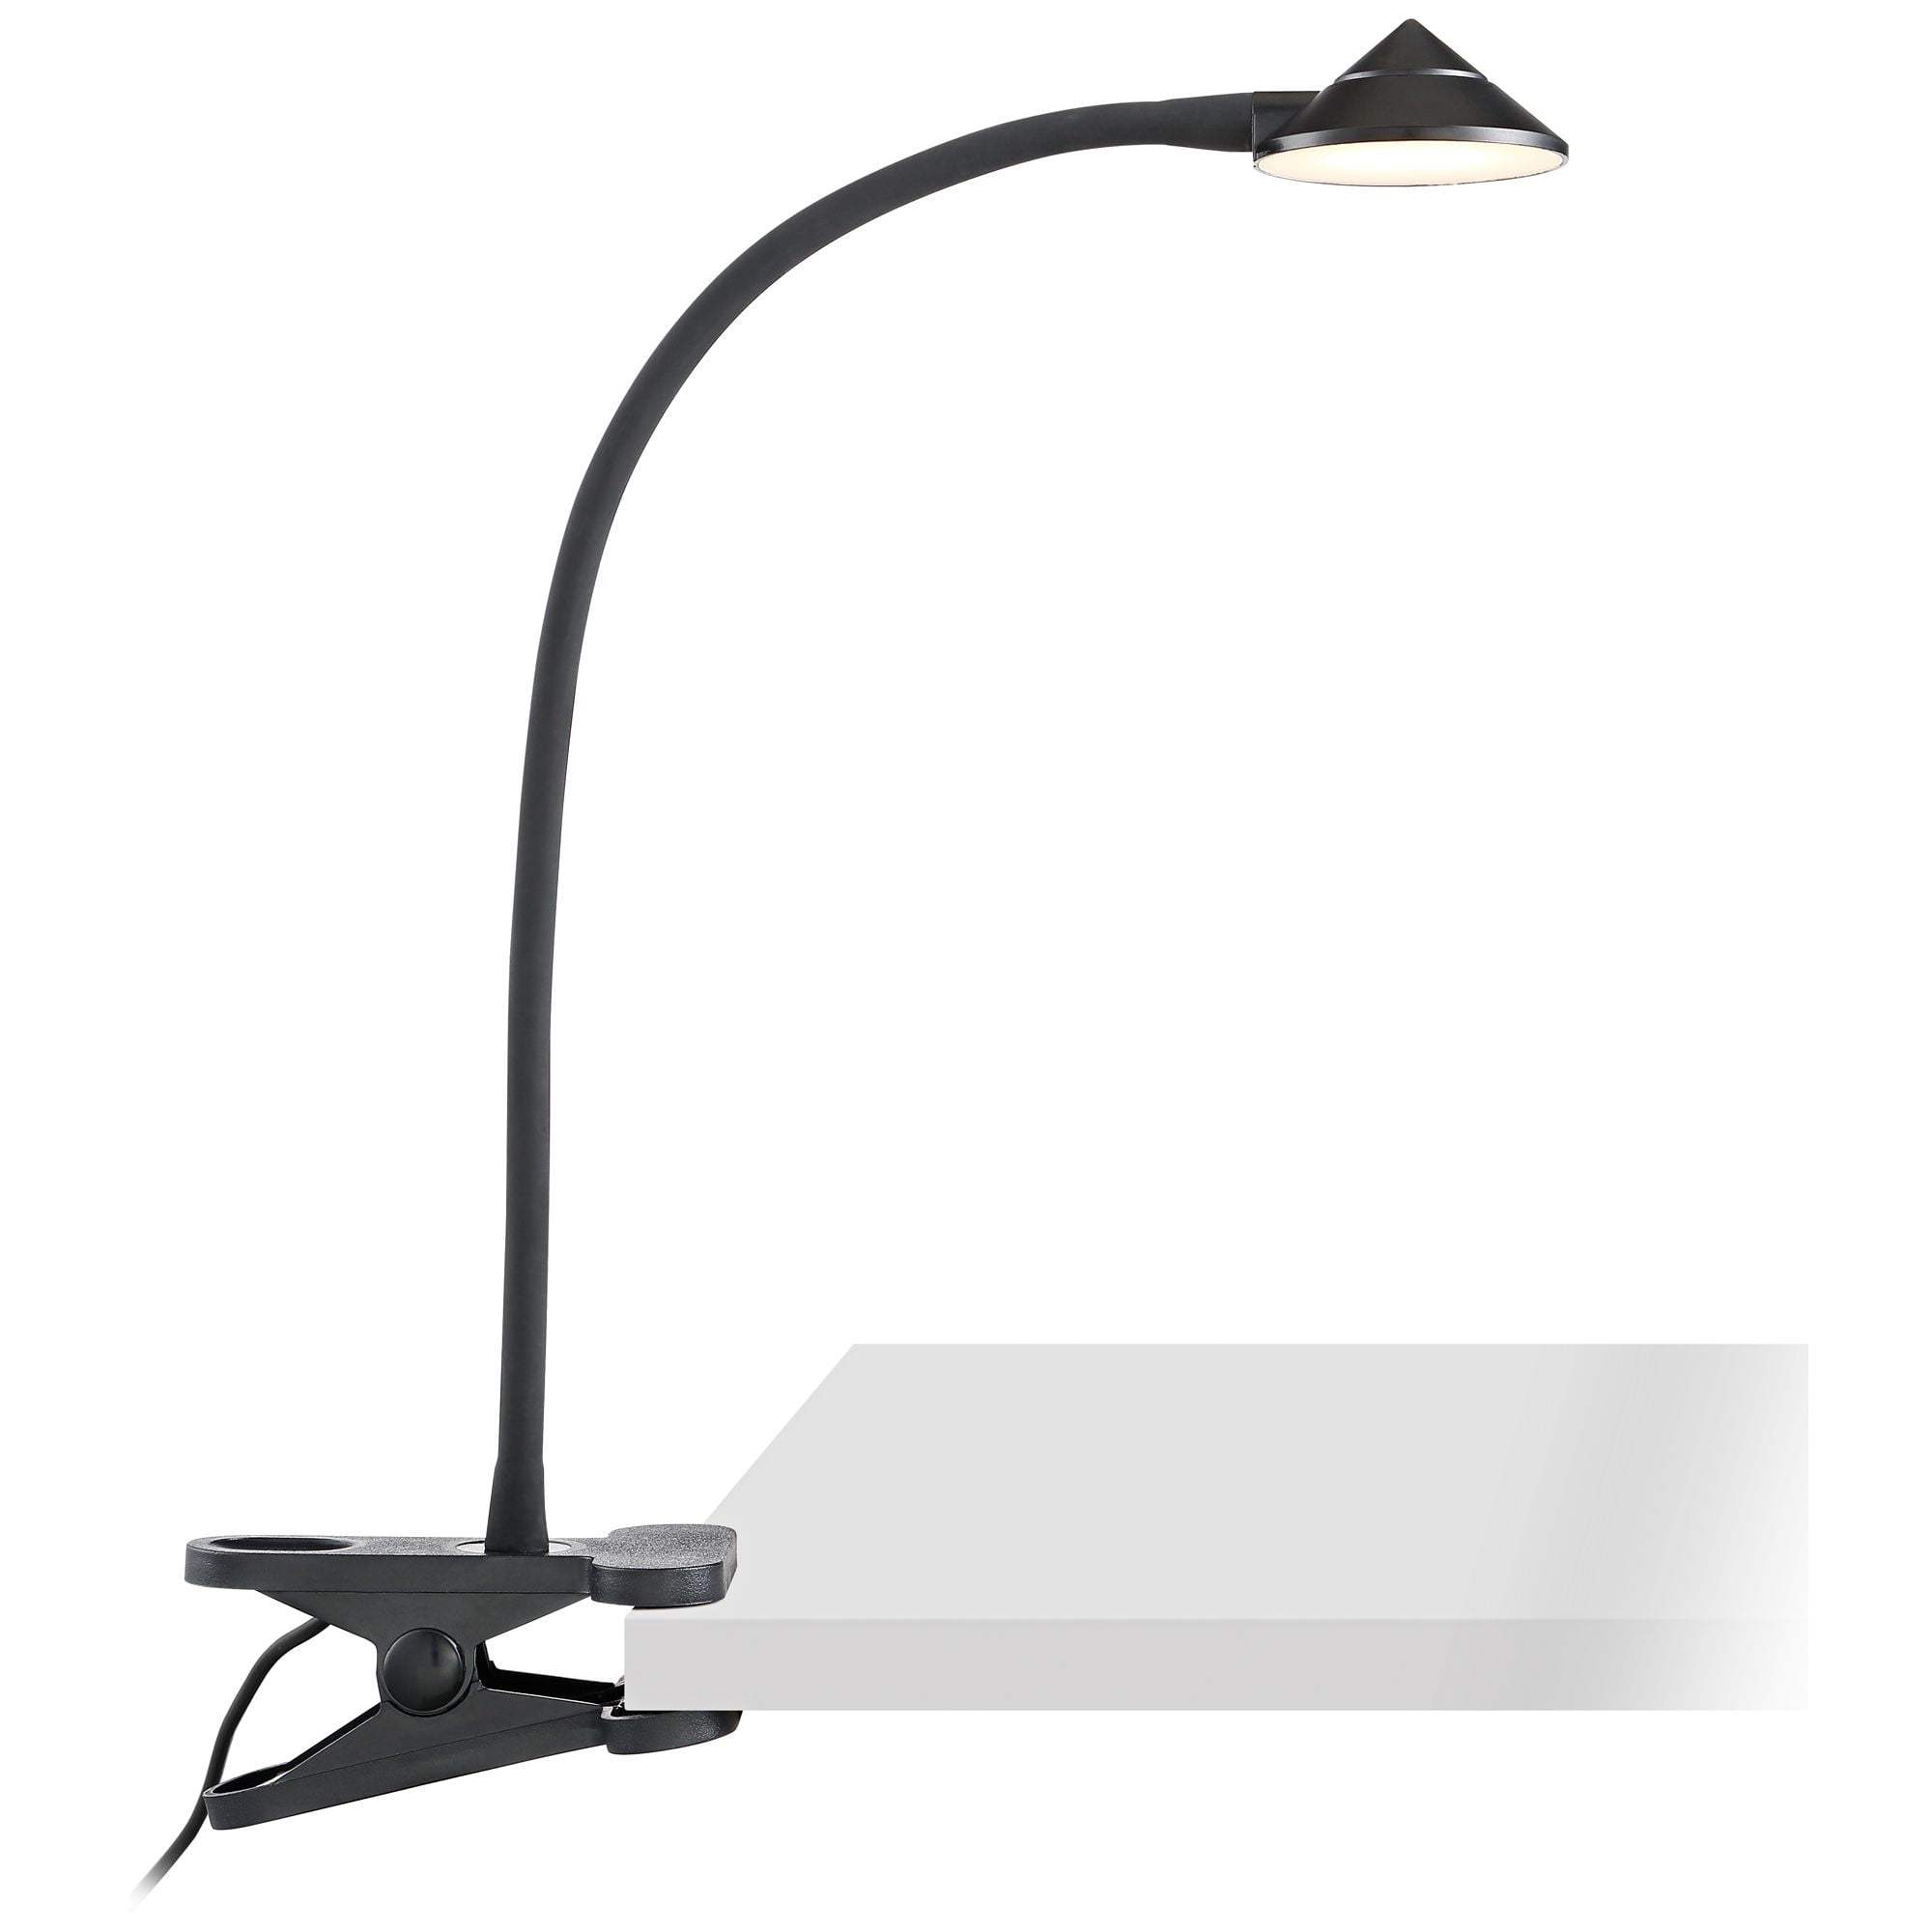 Premium 300-Lumen Pivot Dual-Shade Flexible Reading light Dimmable Table Lamps 